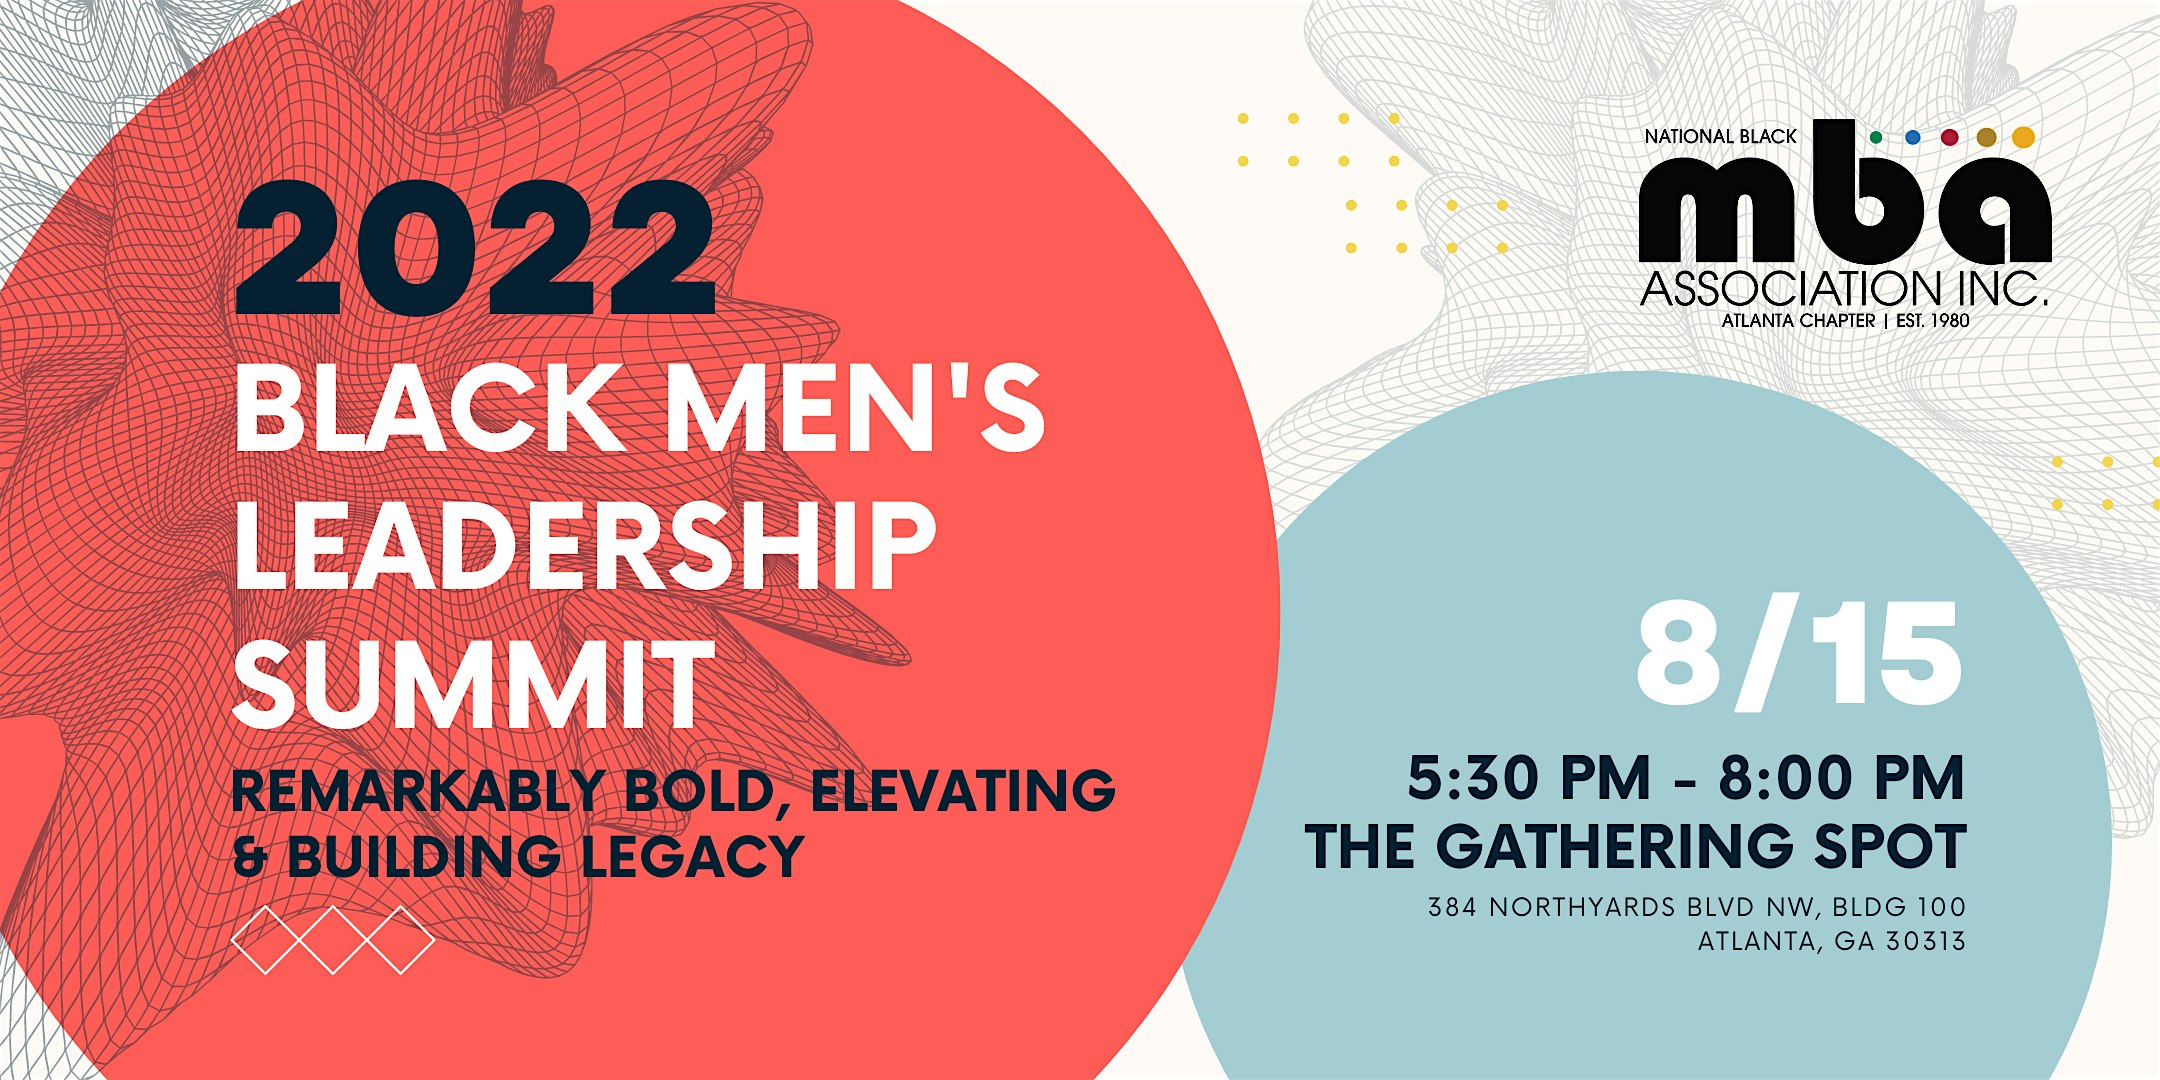 NBMBAA - Atlanta Chapter Presents: 2022 Black Men's Leadership Summit